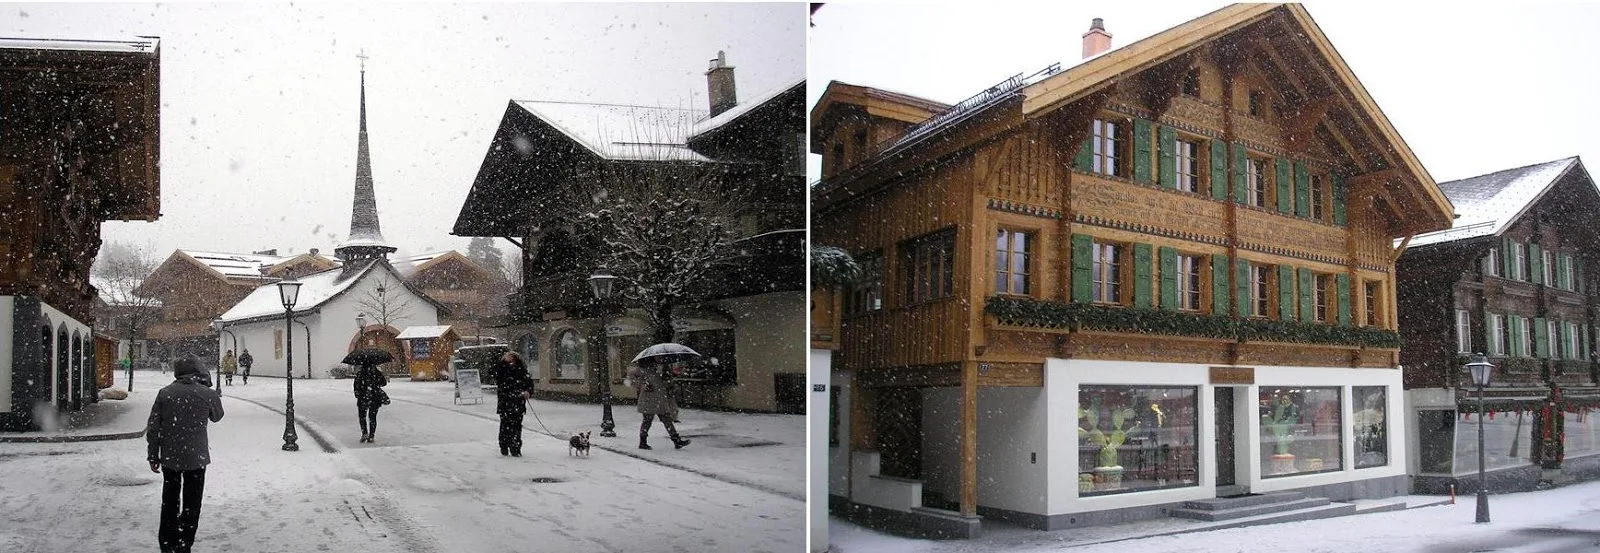 Gstaad Winter 